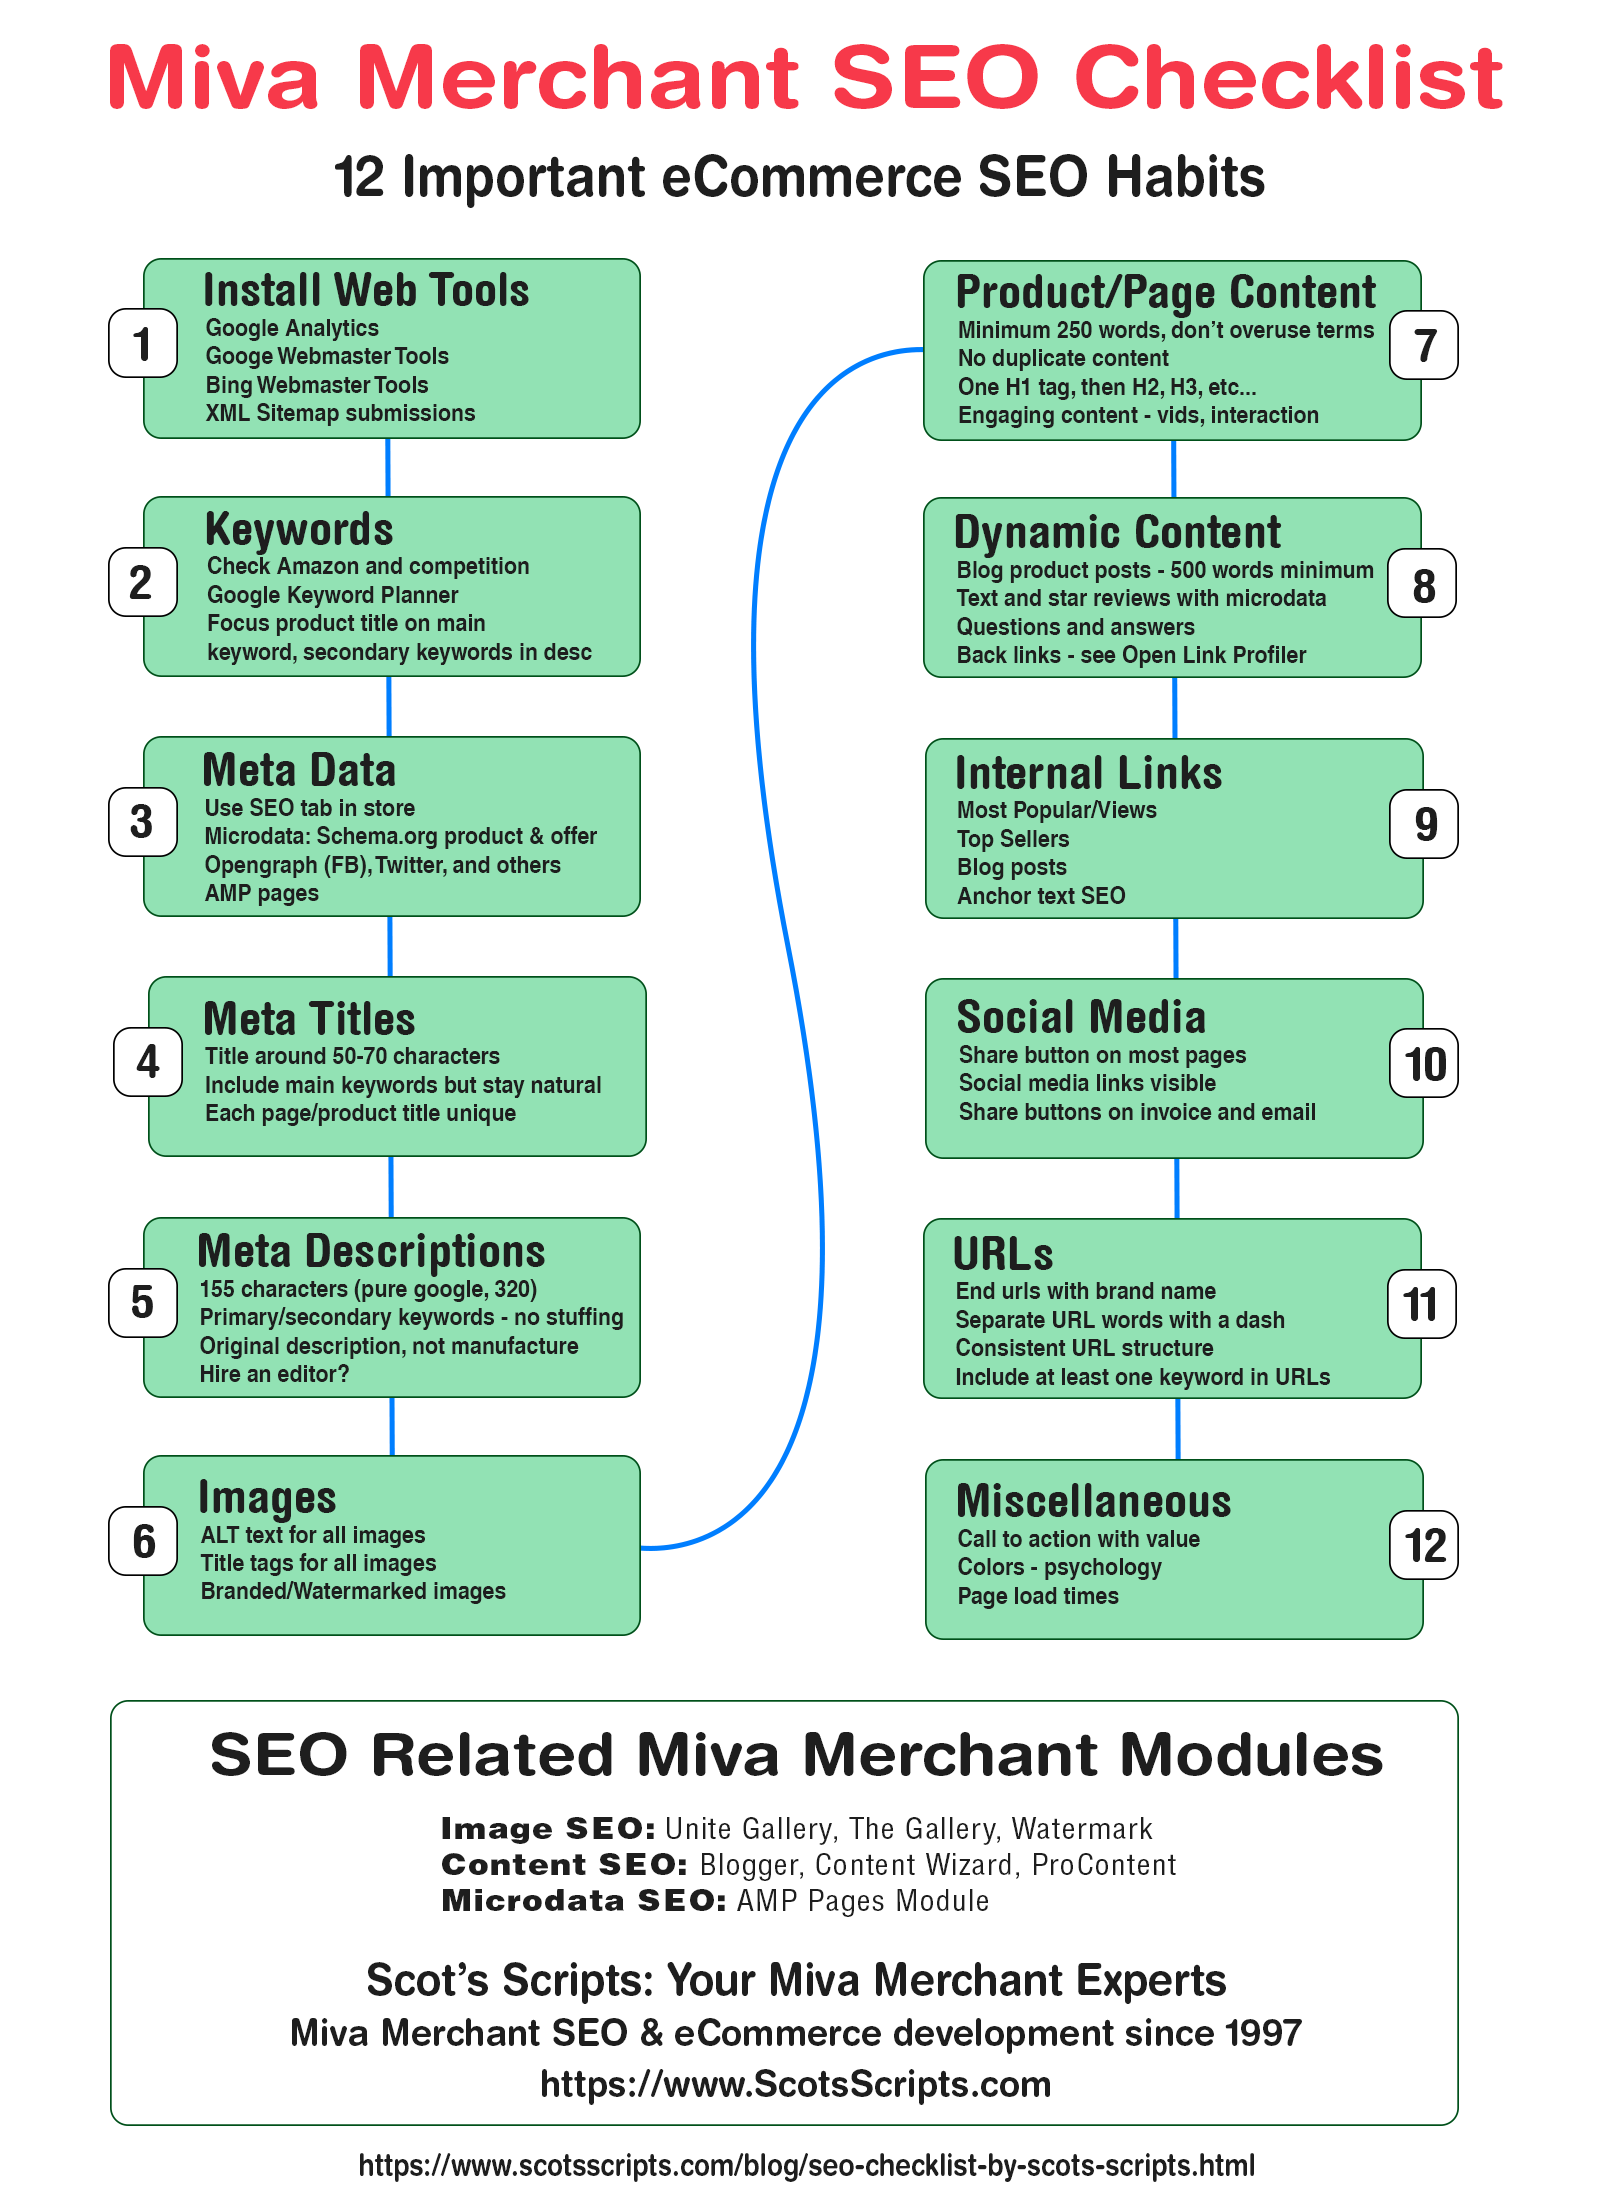 Miva Merchant SEO Checklist from Scot's Miva Scripts